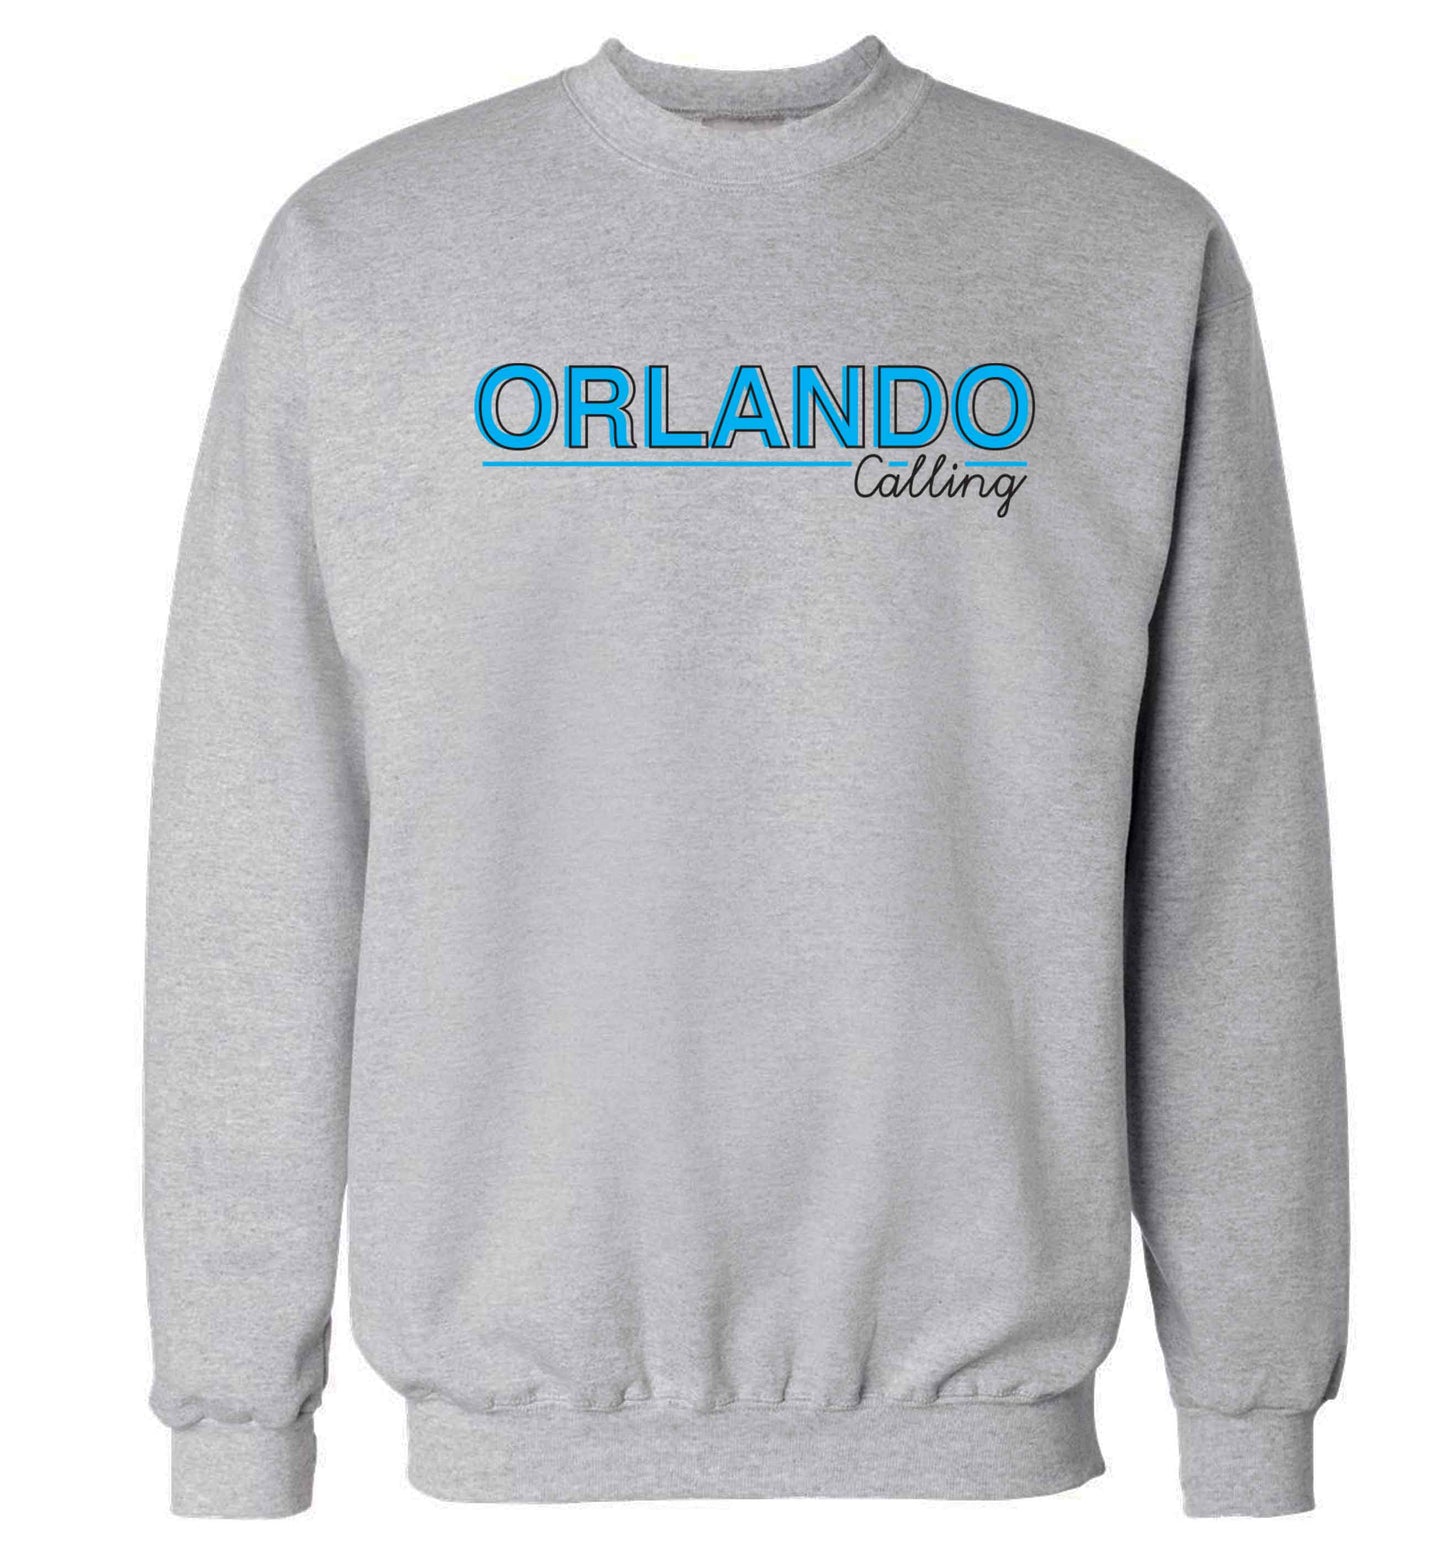 Orlando calling Adult's unisex grey Sweater 2XL